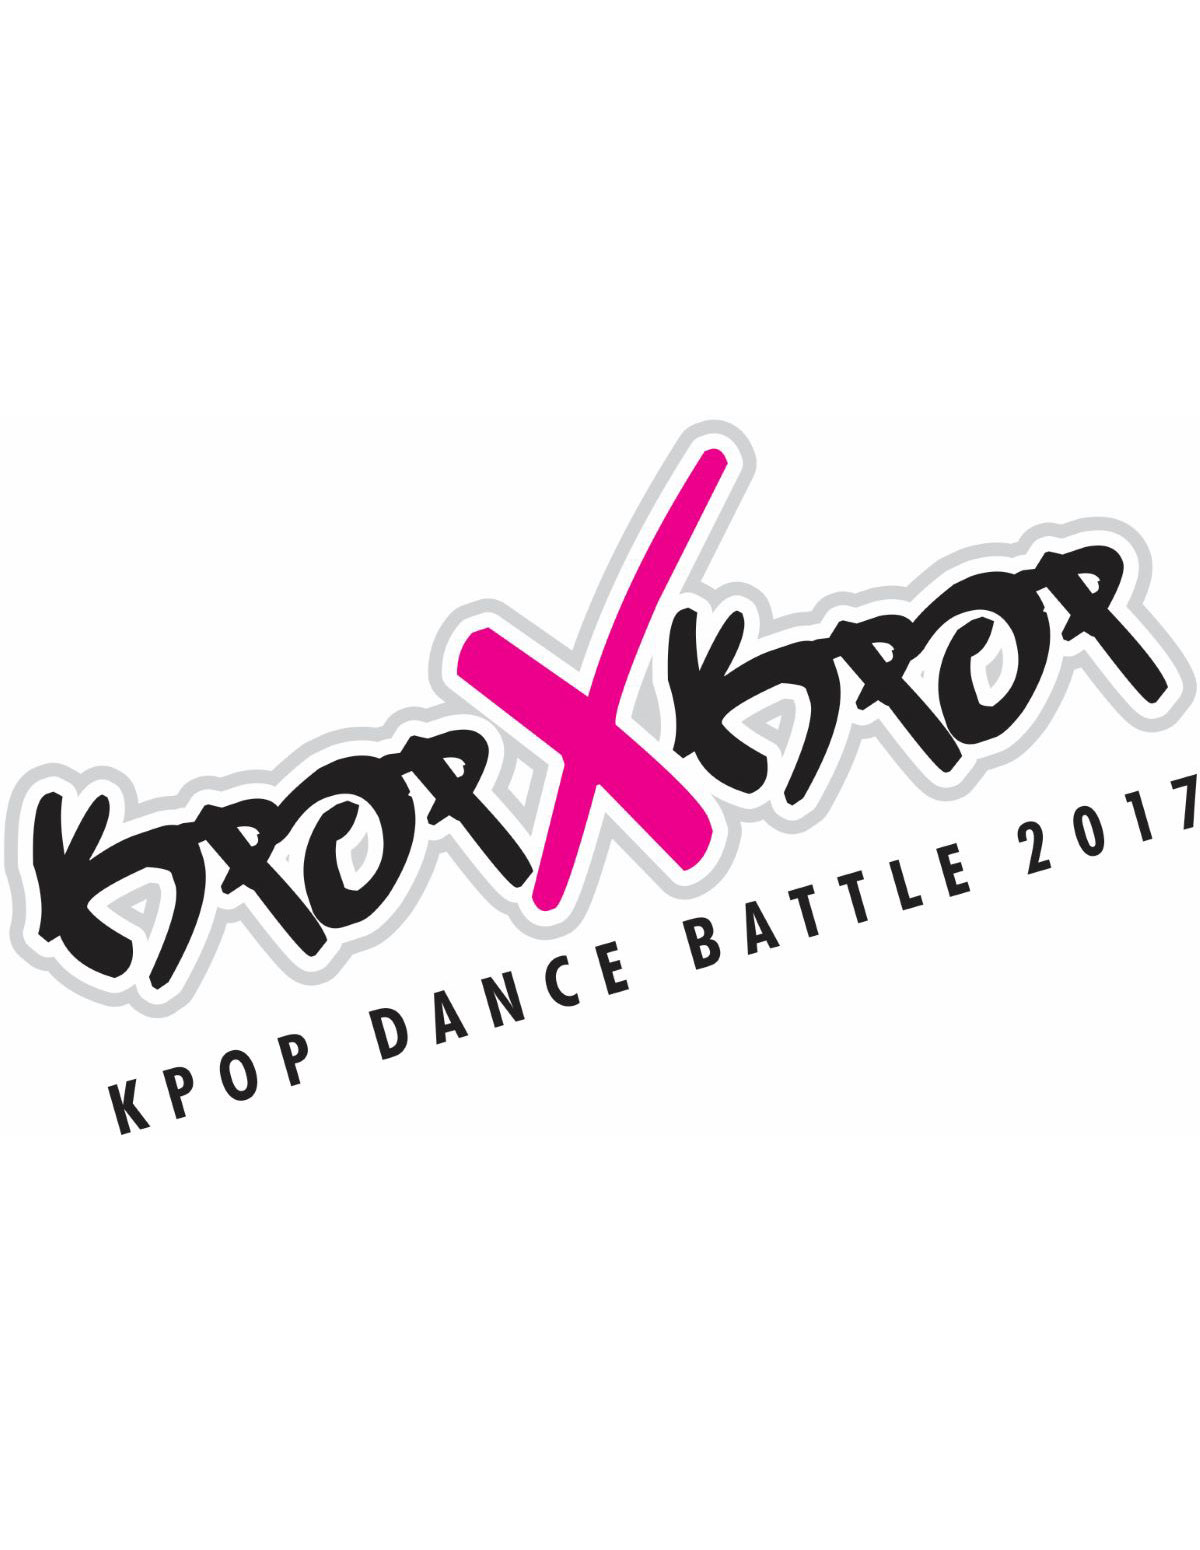 2017 KPOP Dance Battle